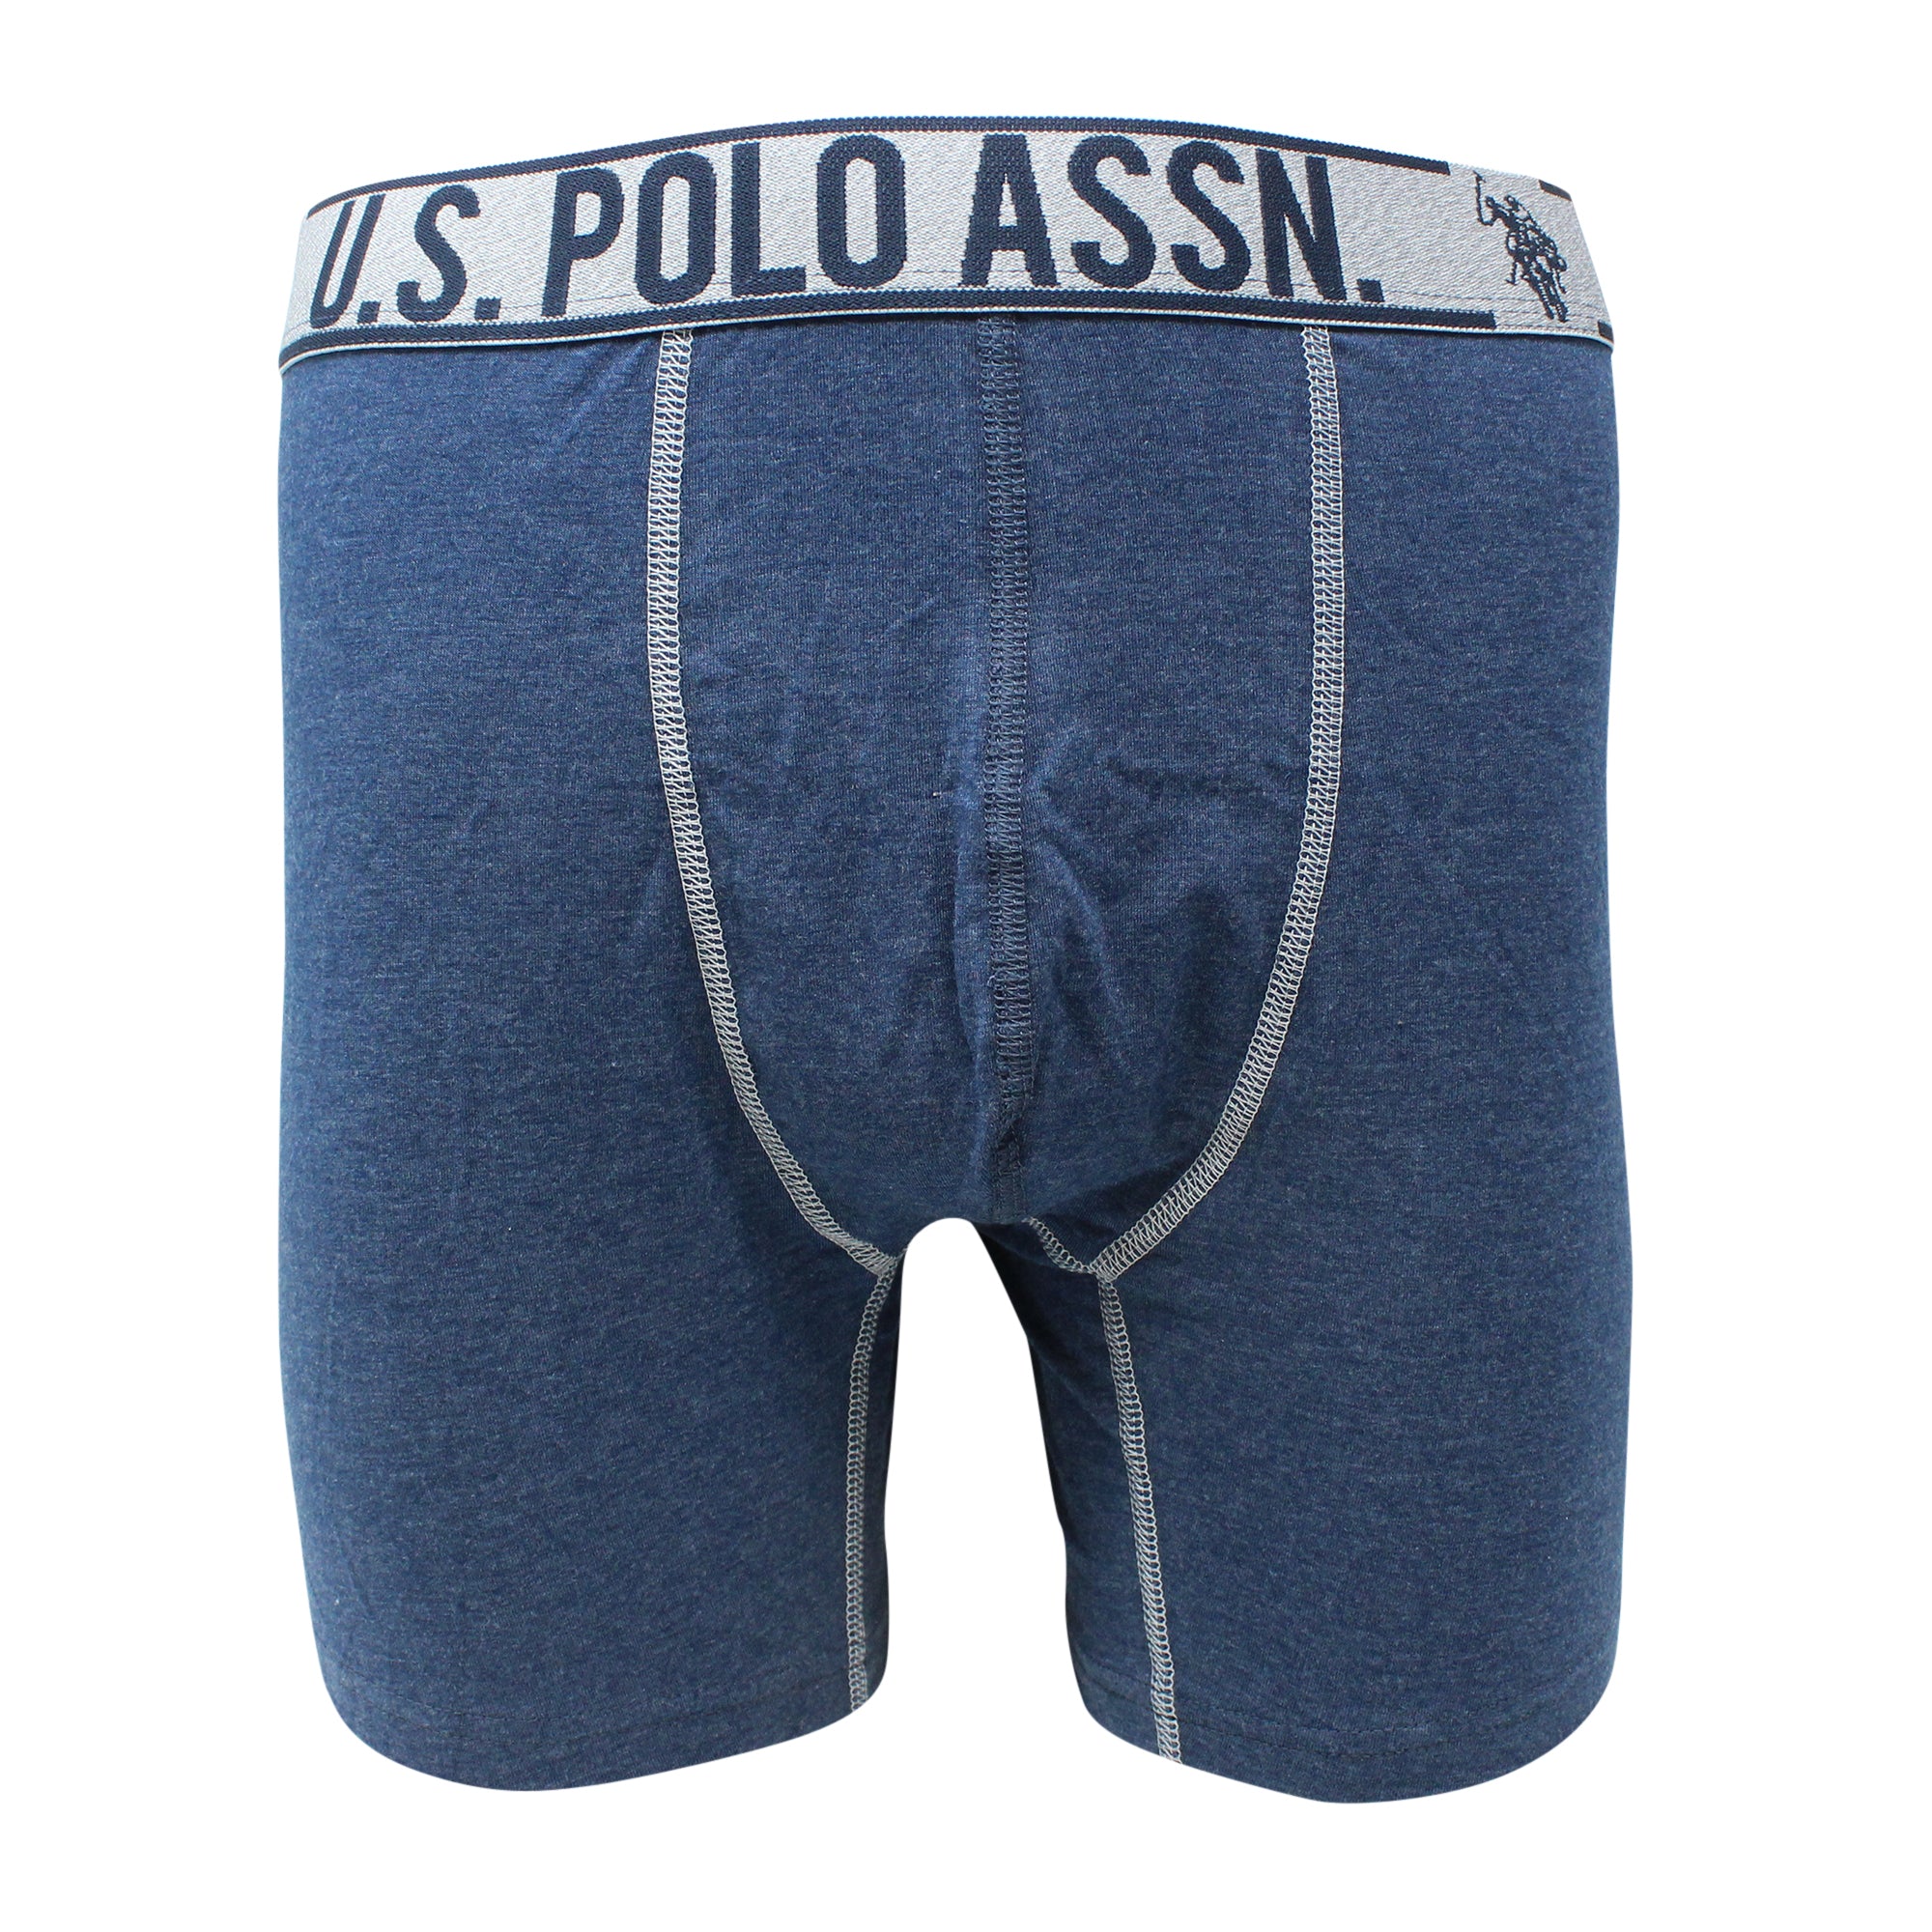 U.S. Polo Assn. Men's 4-Pack Cotton Stretch Boxer Briefs – I-Max